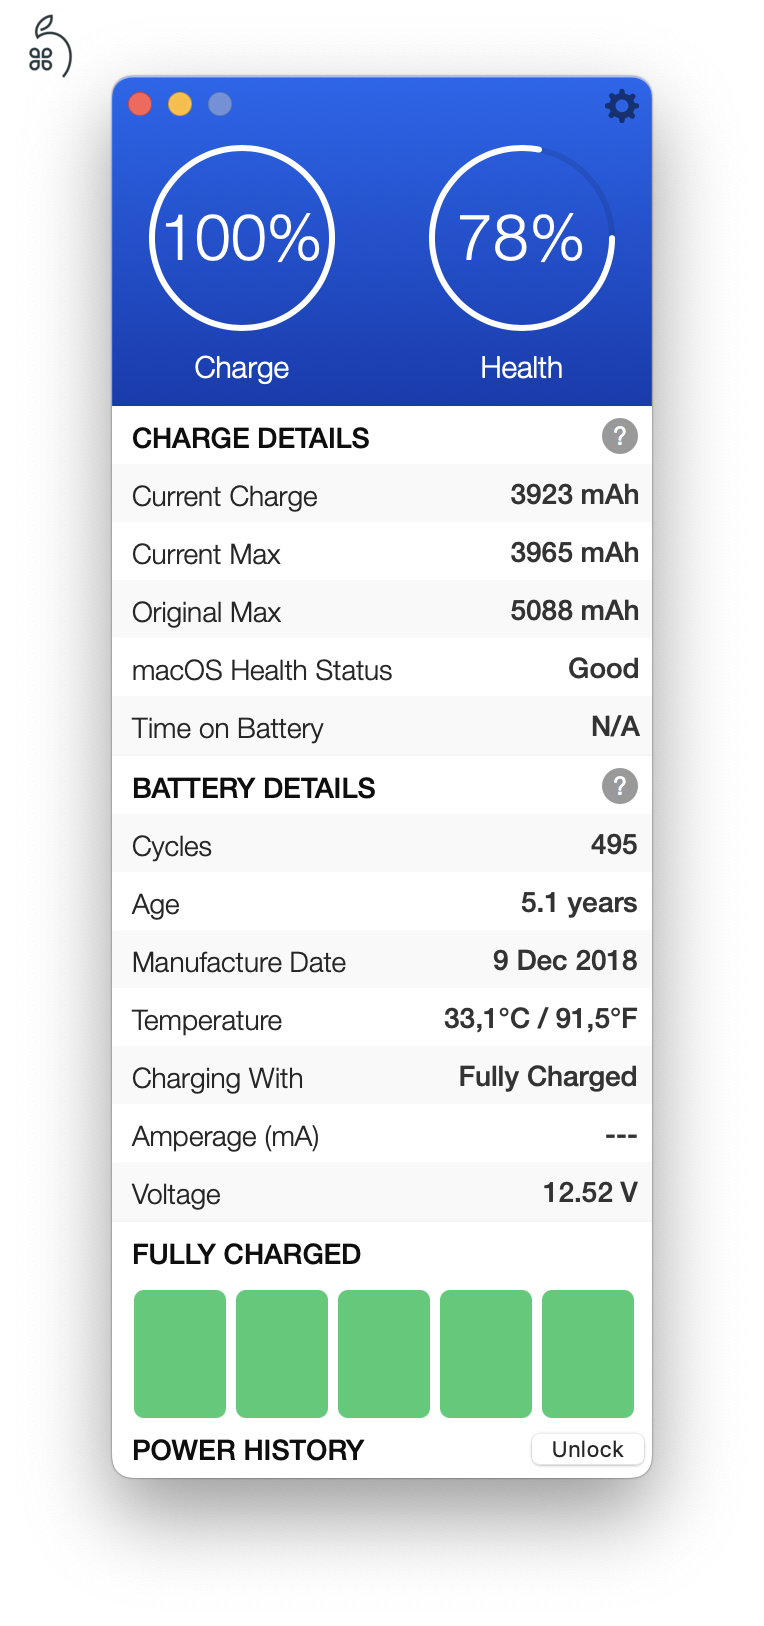 MacBook Pro 2018, 13,3-inch Retina, 16GB RAM, 256GB SSD, 2,3GHz Quad-Core i5